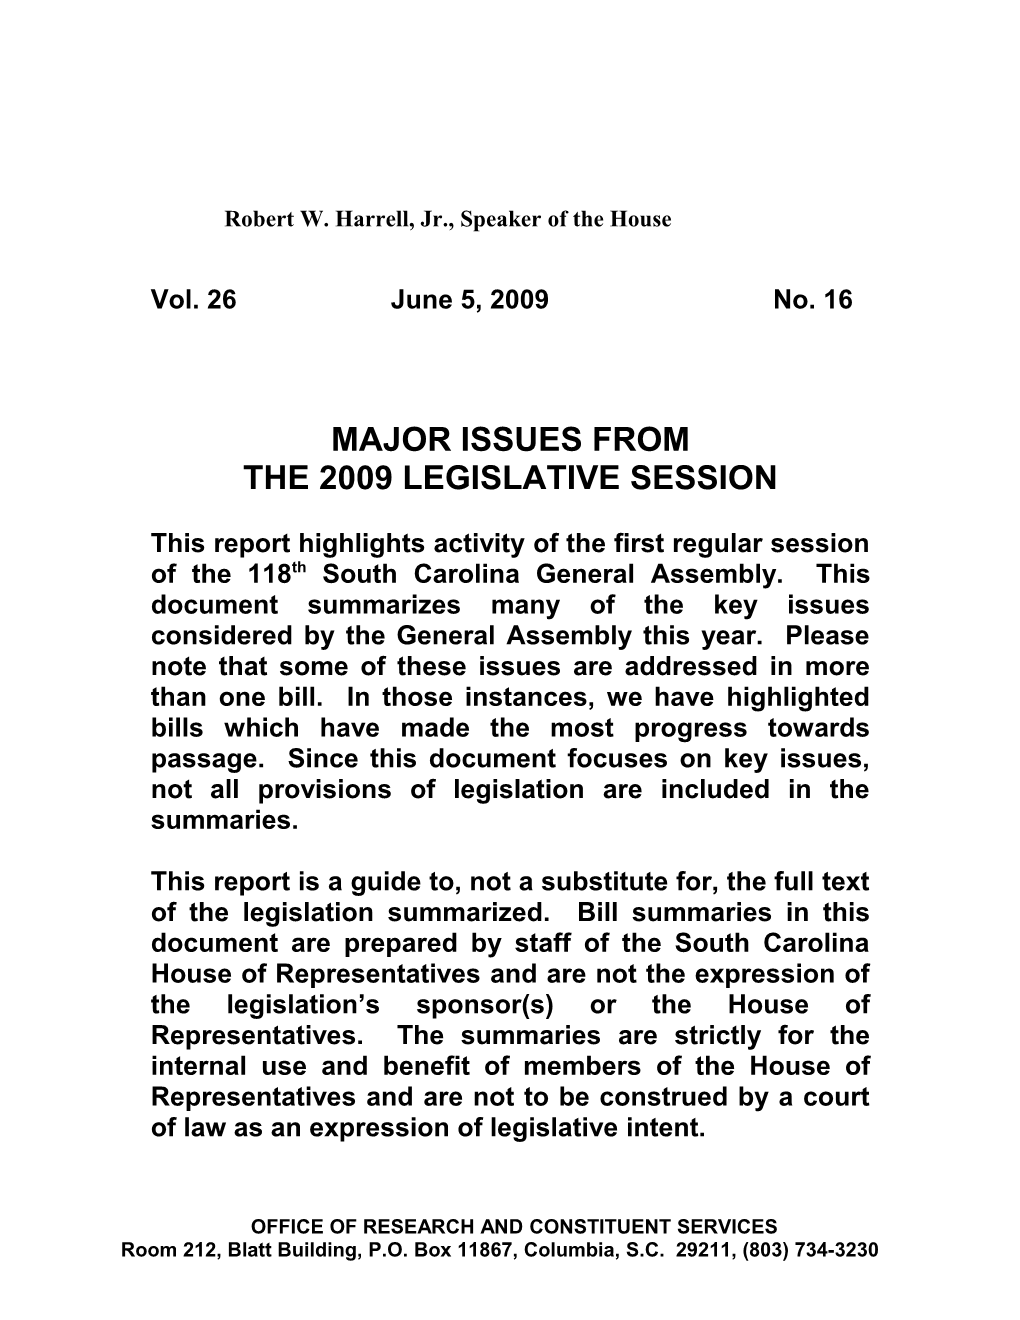 Legislative Update - Vol. 26 No. 16 June 5, 2009 - South Carolina Legislature Online